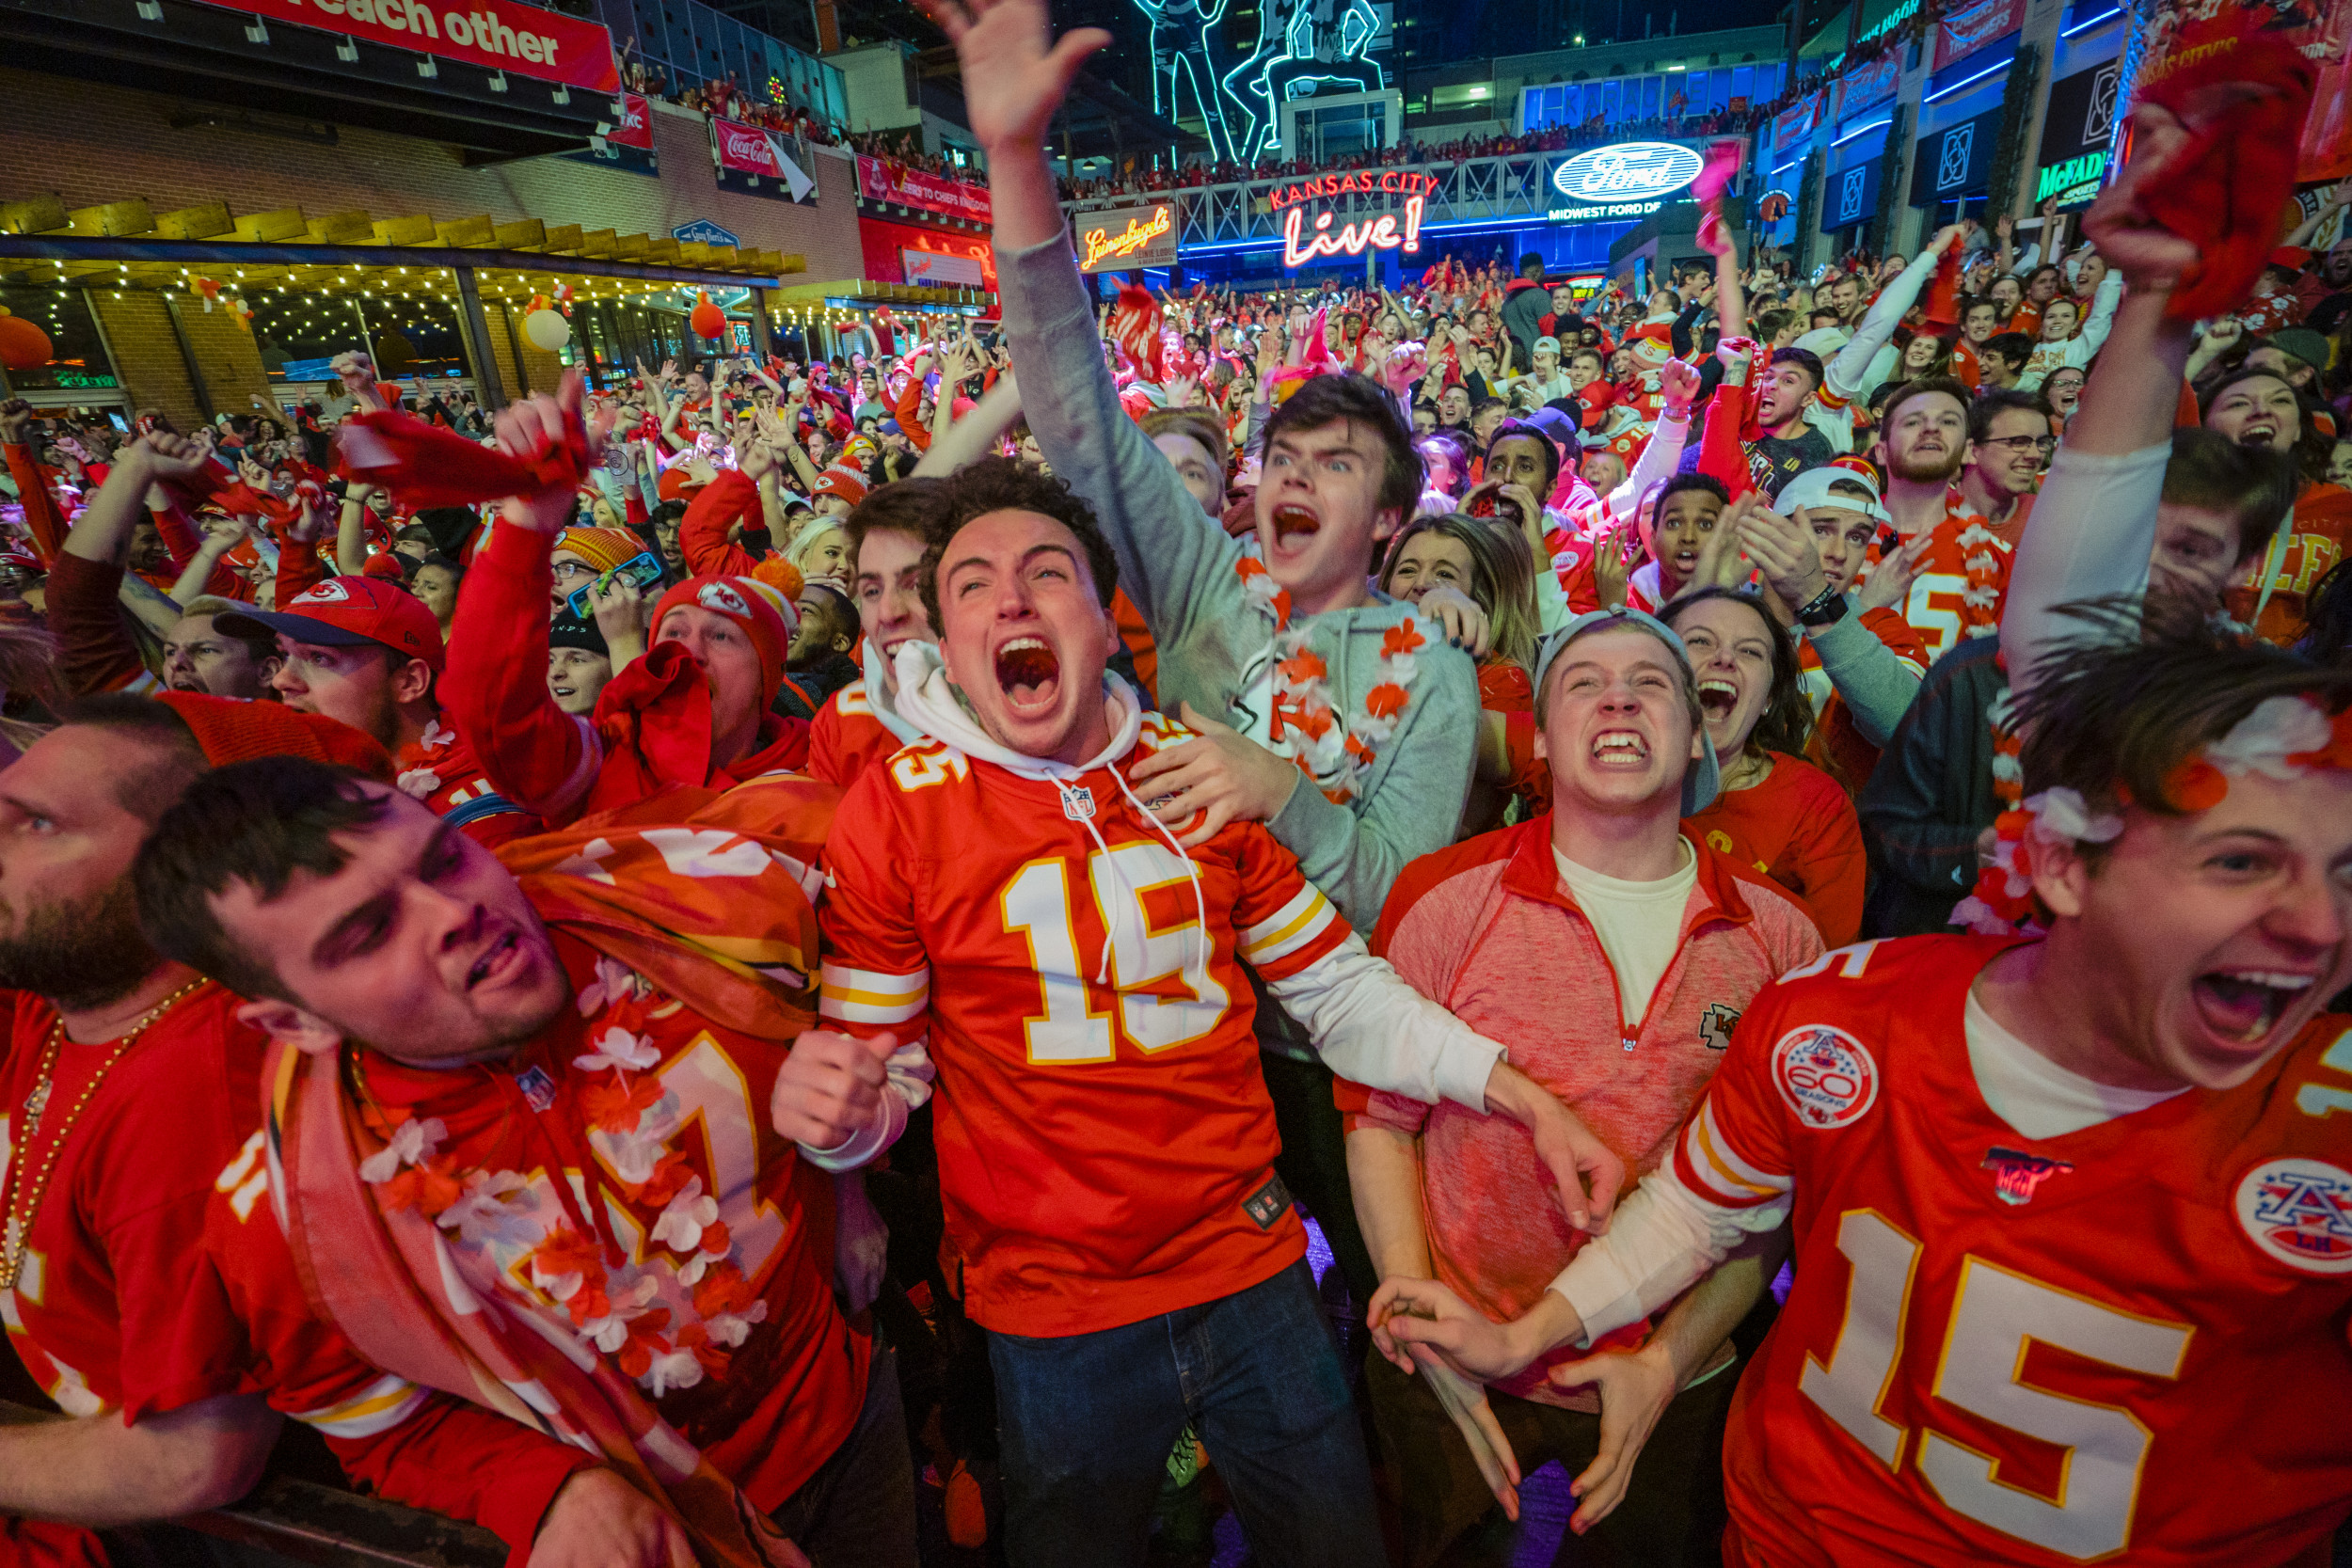 PHOTOS: Thousands descend on downtown KC for Chiefs Super Bowl parade